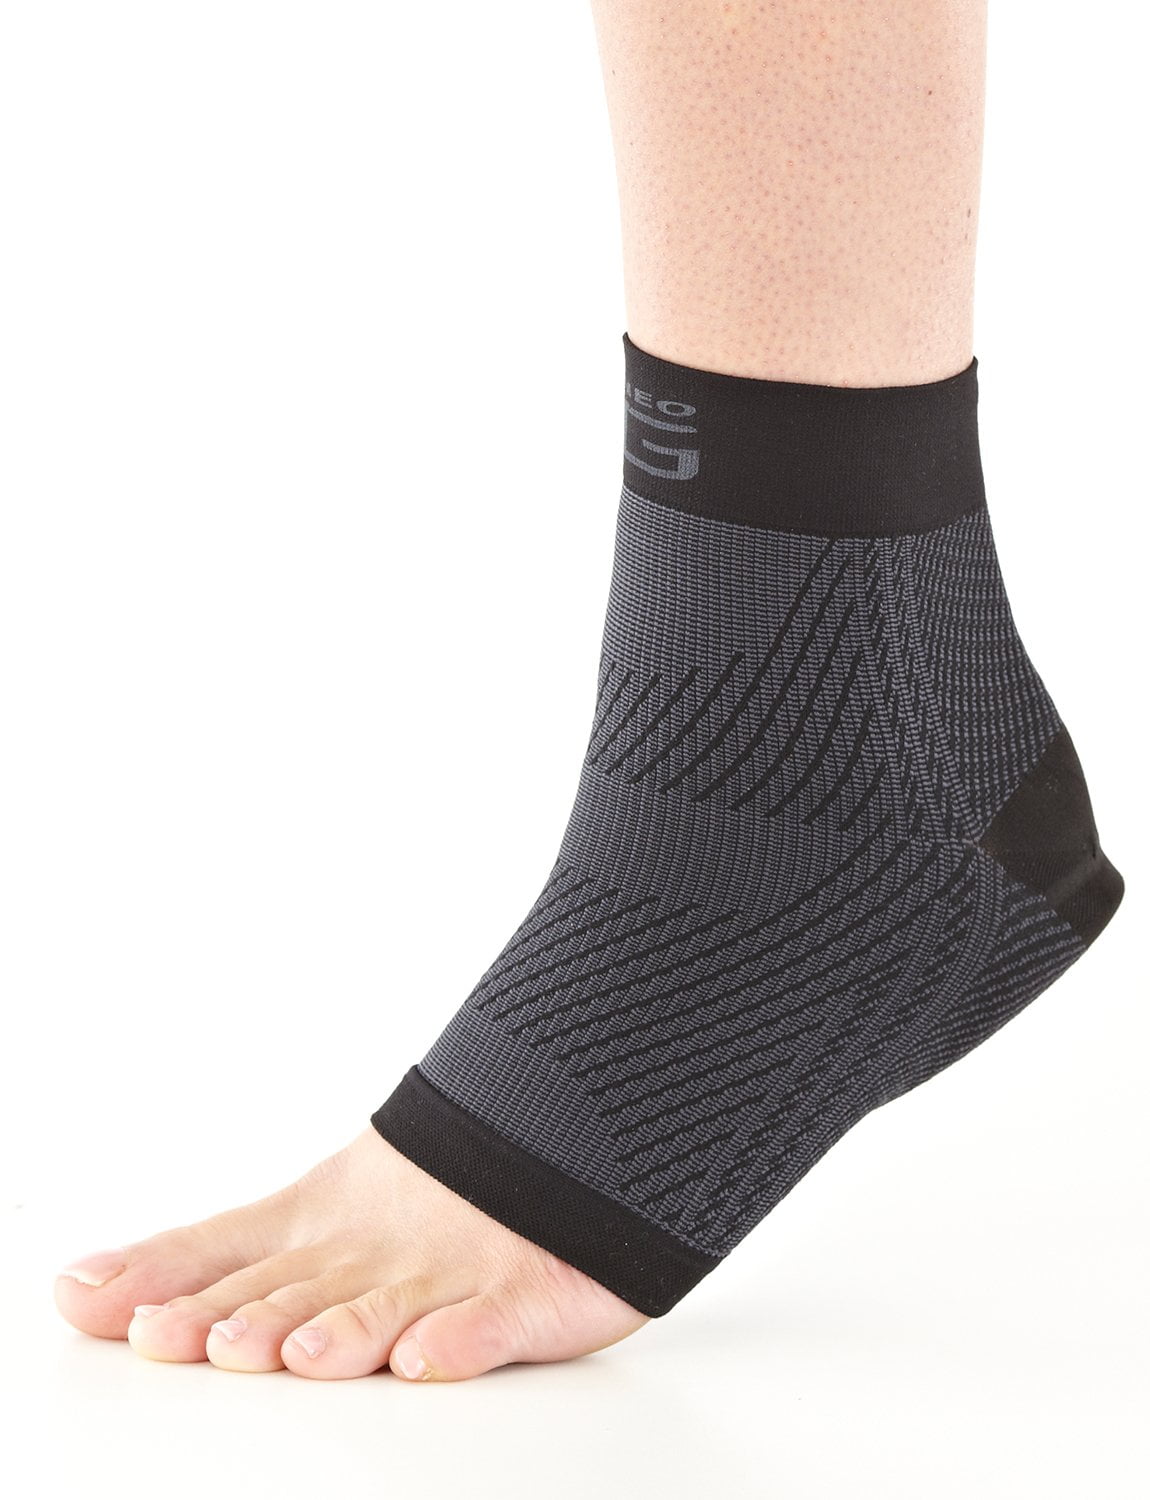 Neo G Plantar Fasciitis Compression Socks, Support for Plantar